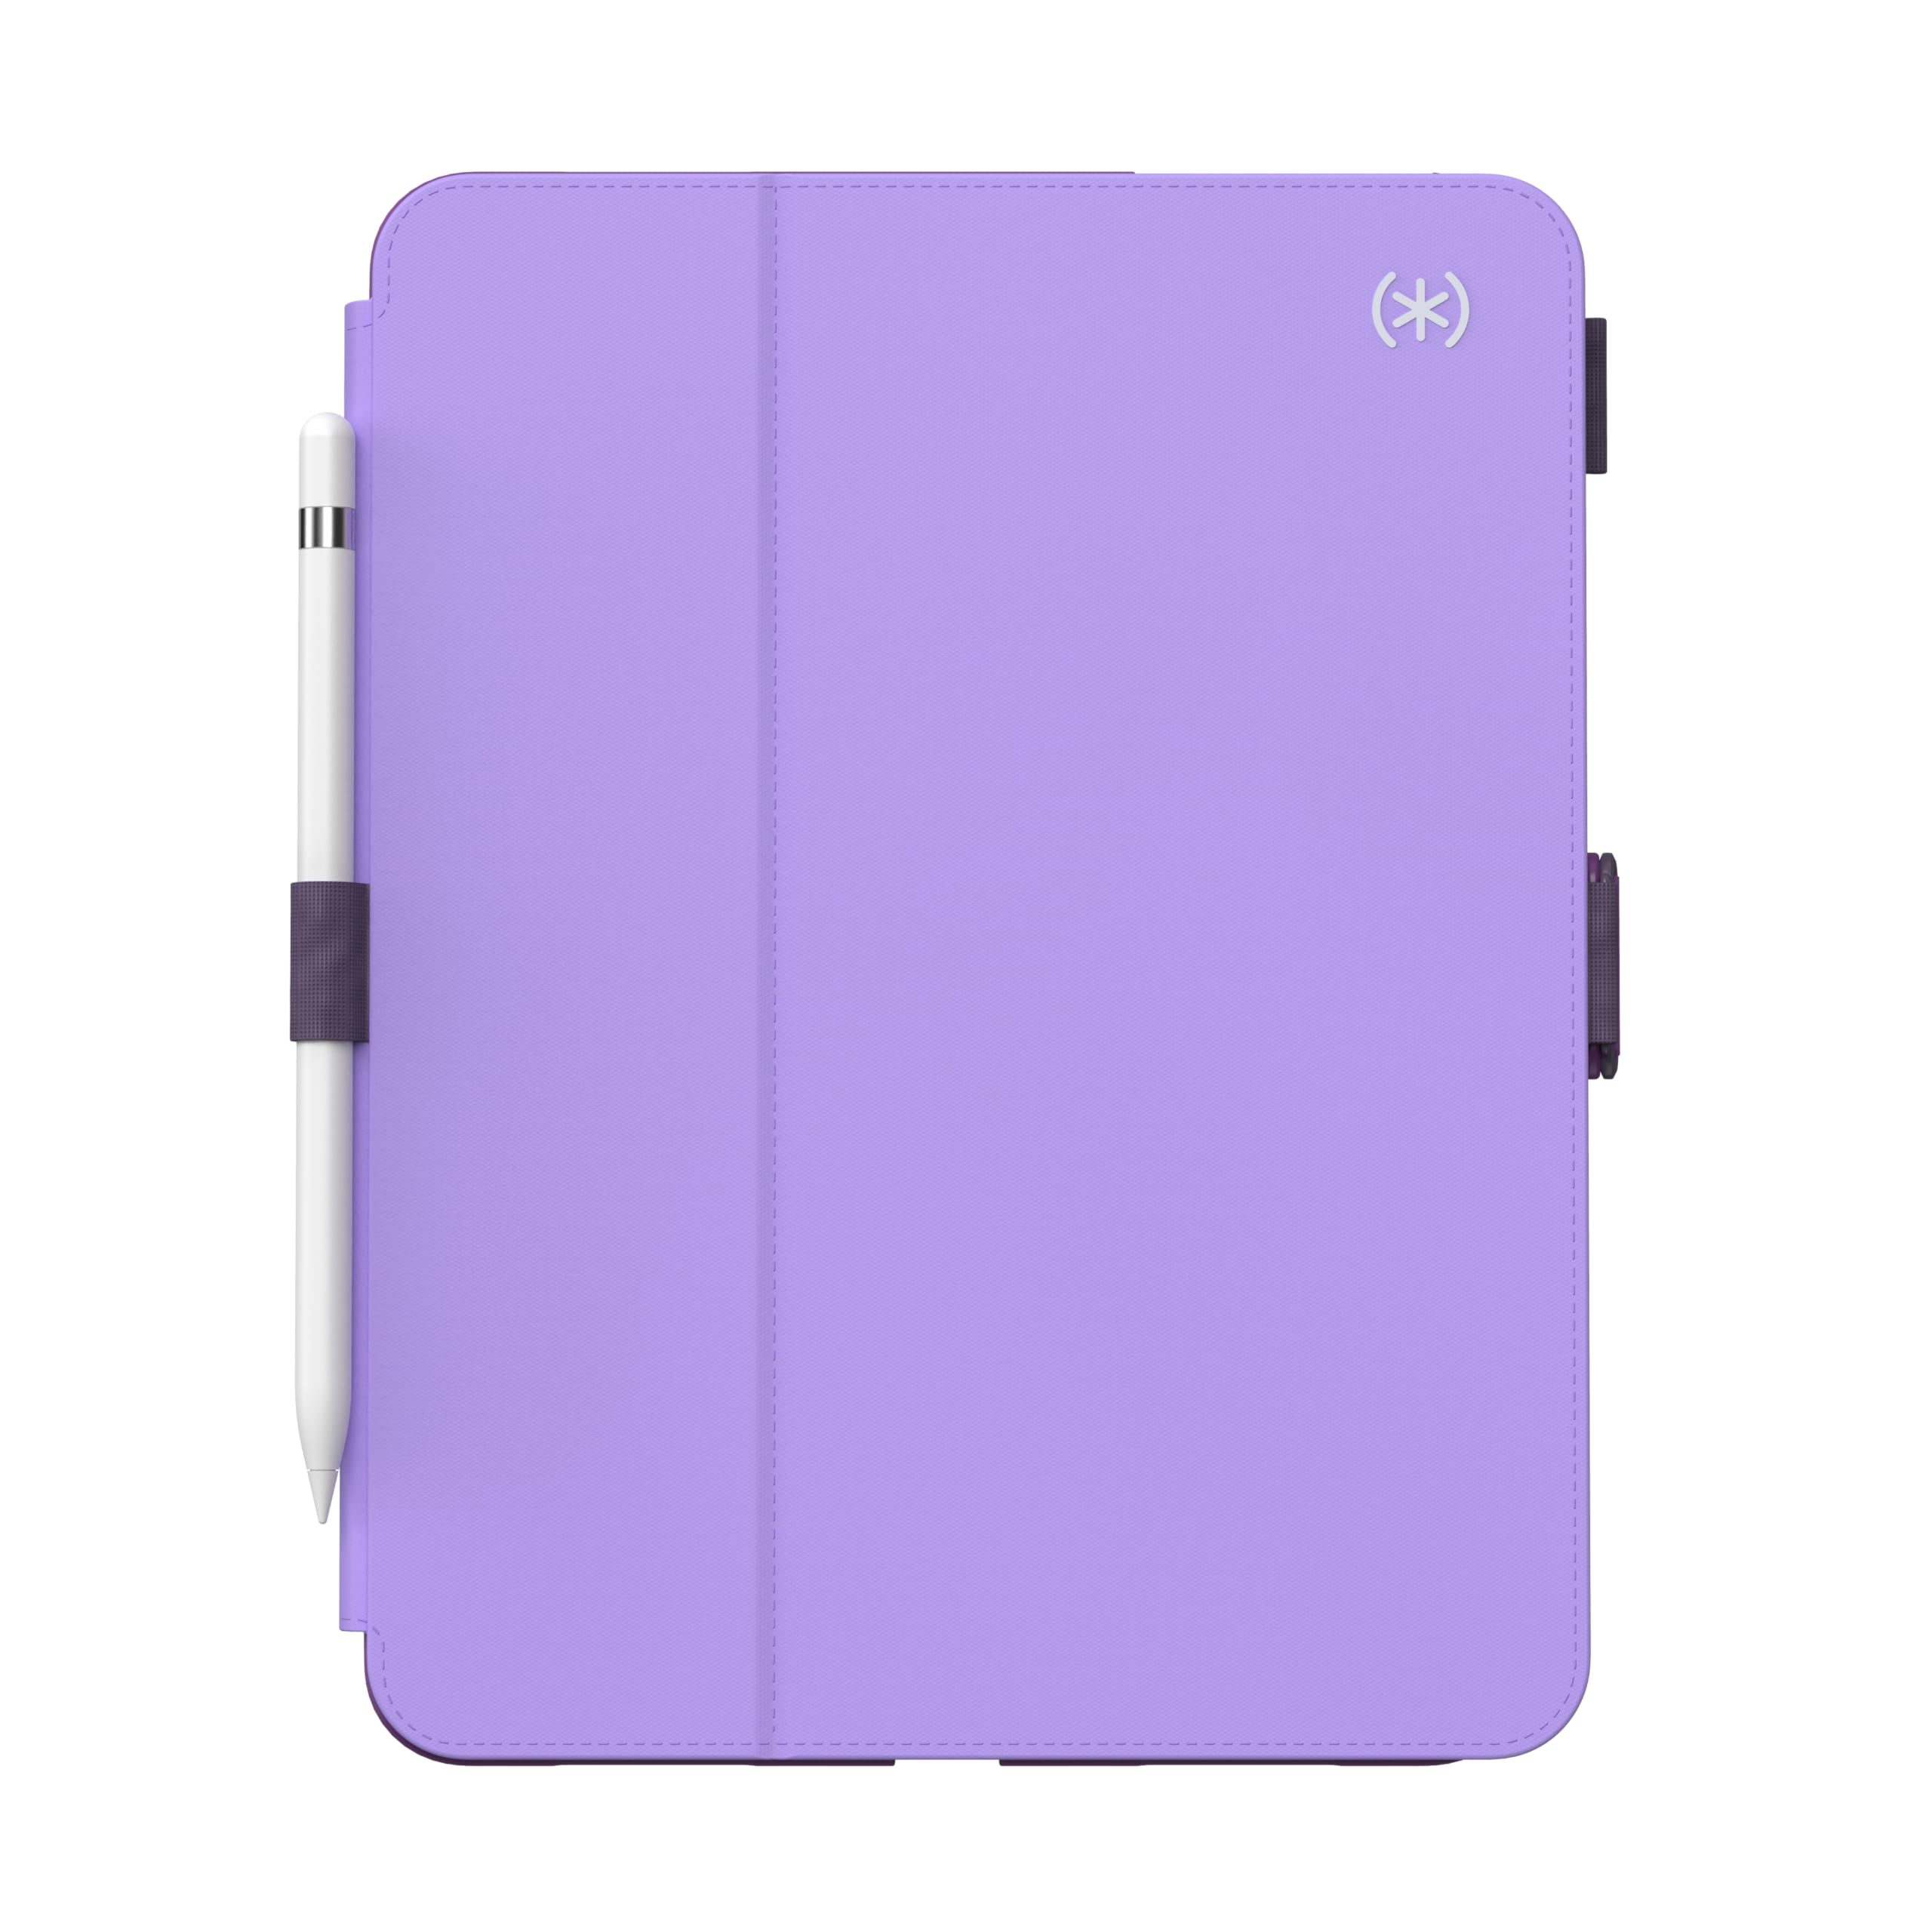 Speck iPad 10th Generation Case 2022 - Slim Multi Range Stand, Hard Back Case - Apple Pencil Holder & Drop Protection - 10.9 Inch iPad, Camera Shield - Ube Brew/Grape Parfait BalanceFolio